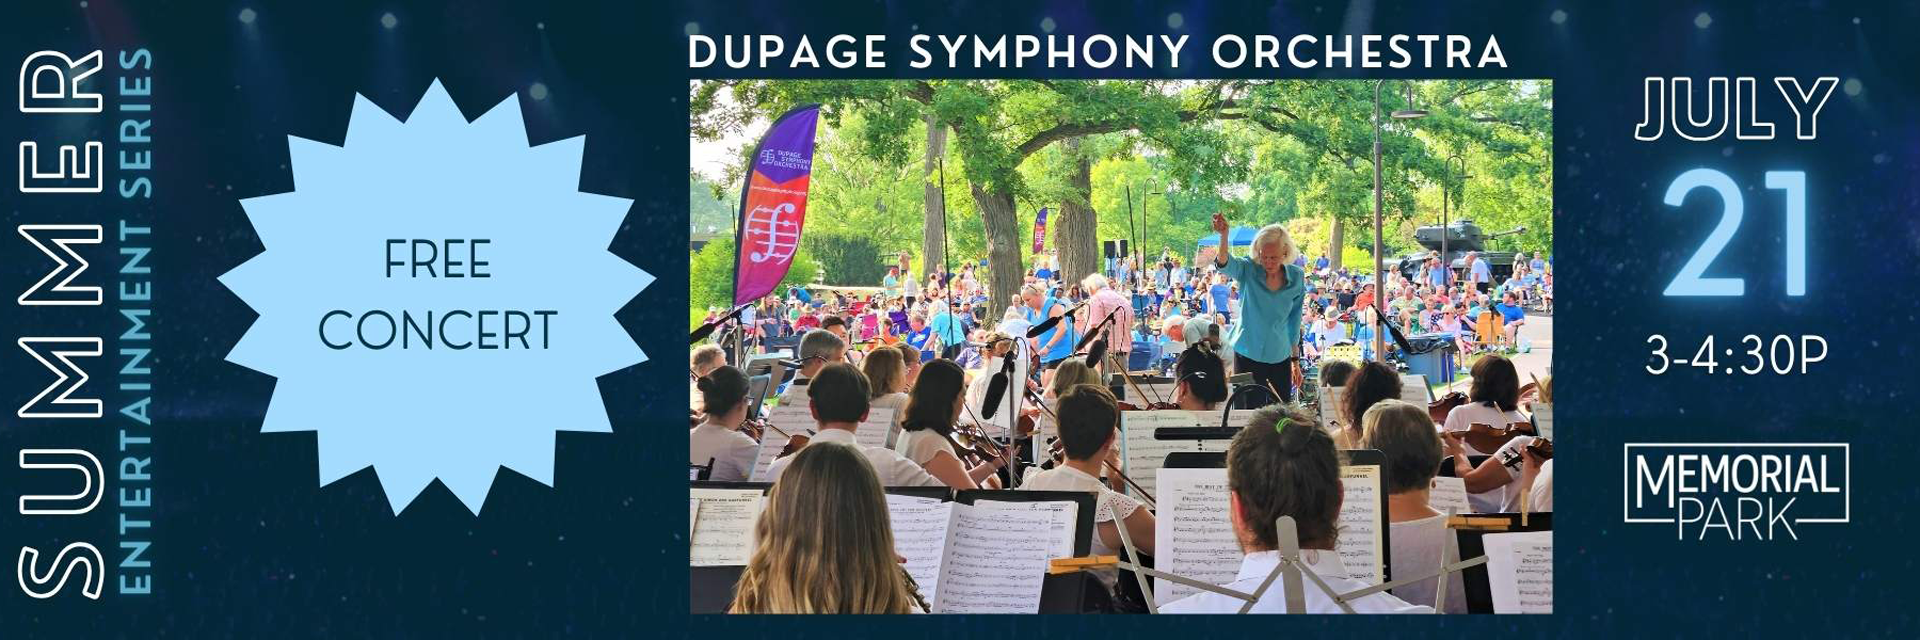 DuPage Symphony Orchestra Concert